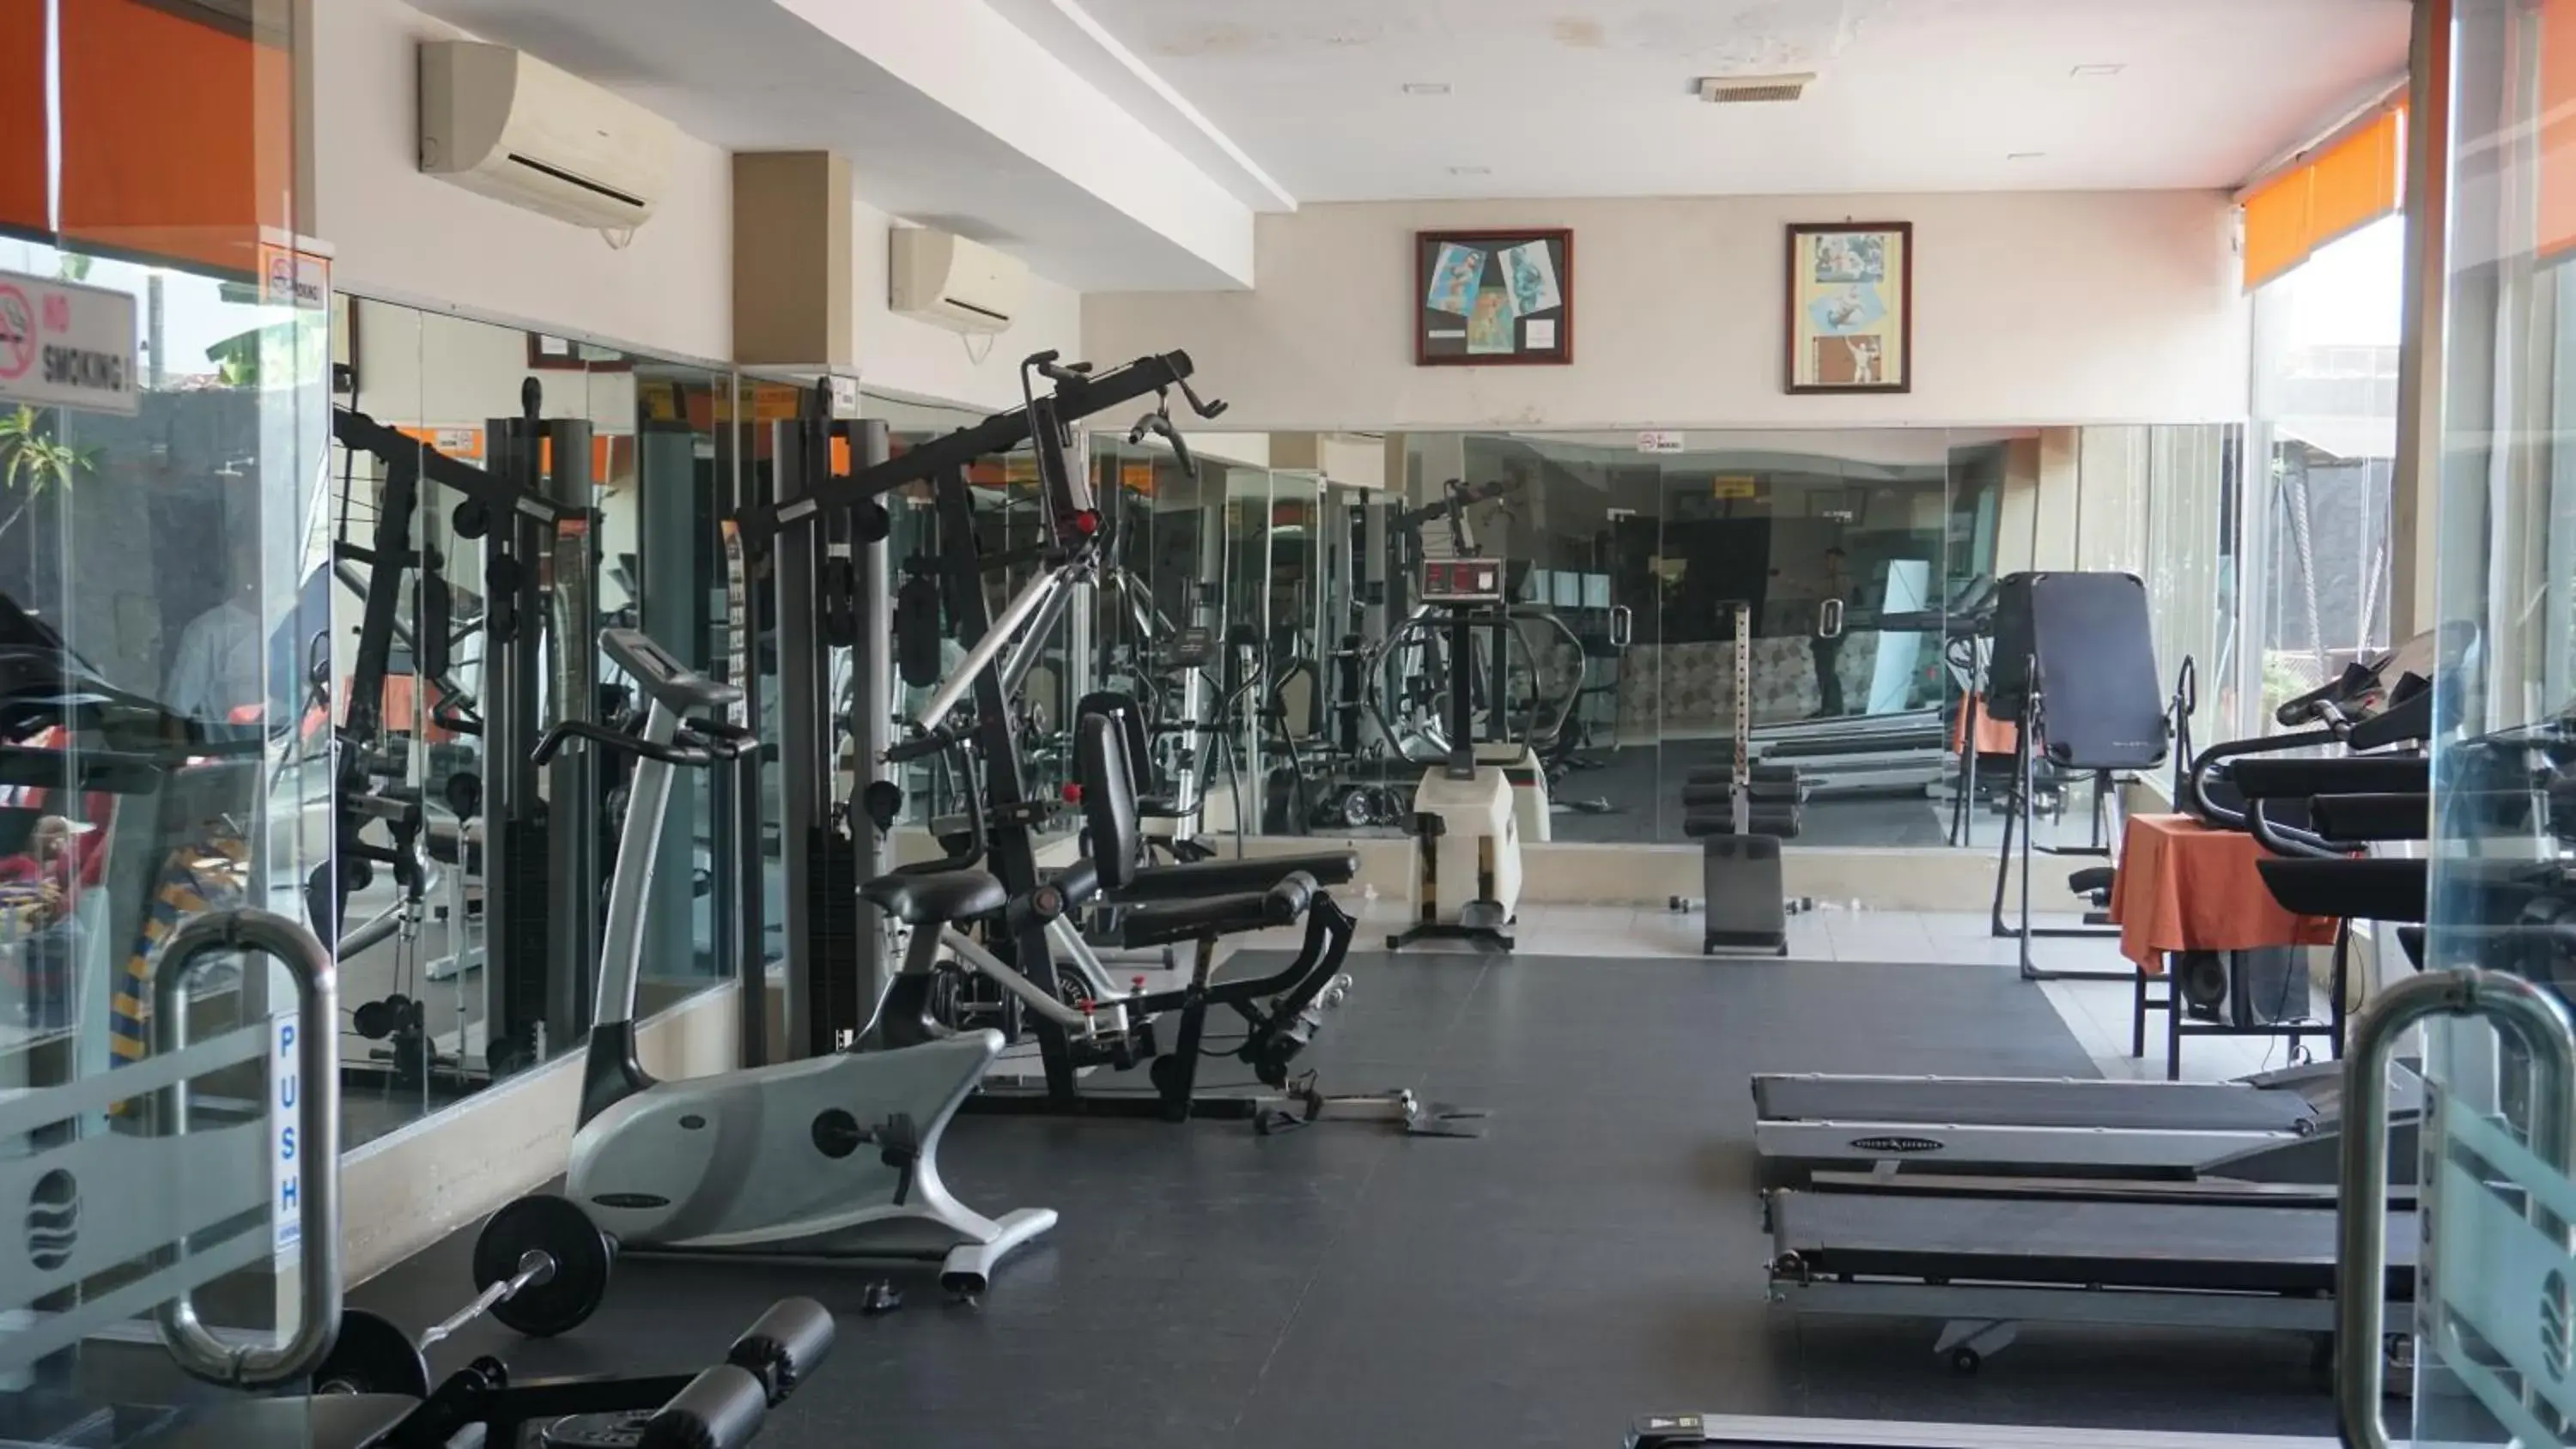 Fitness centre/facilities, Fitness Center/Facilities in Comforta Dumai